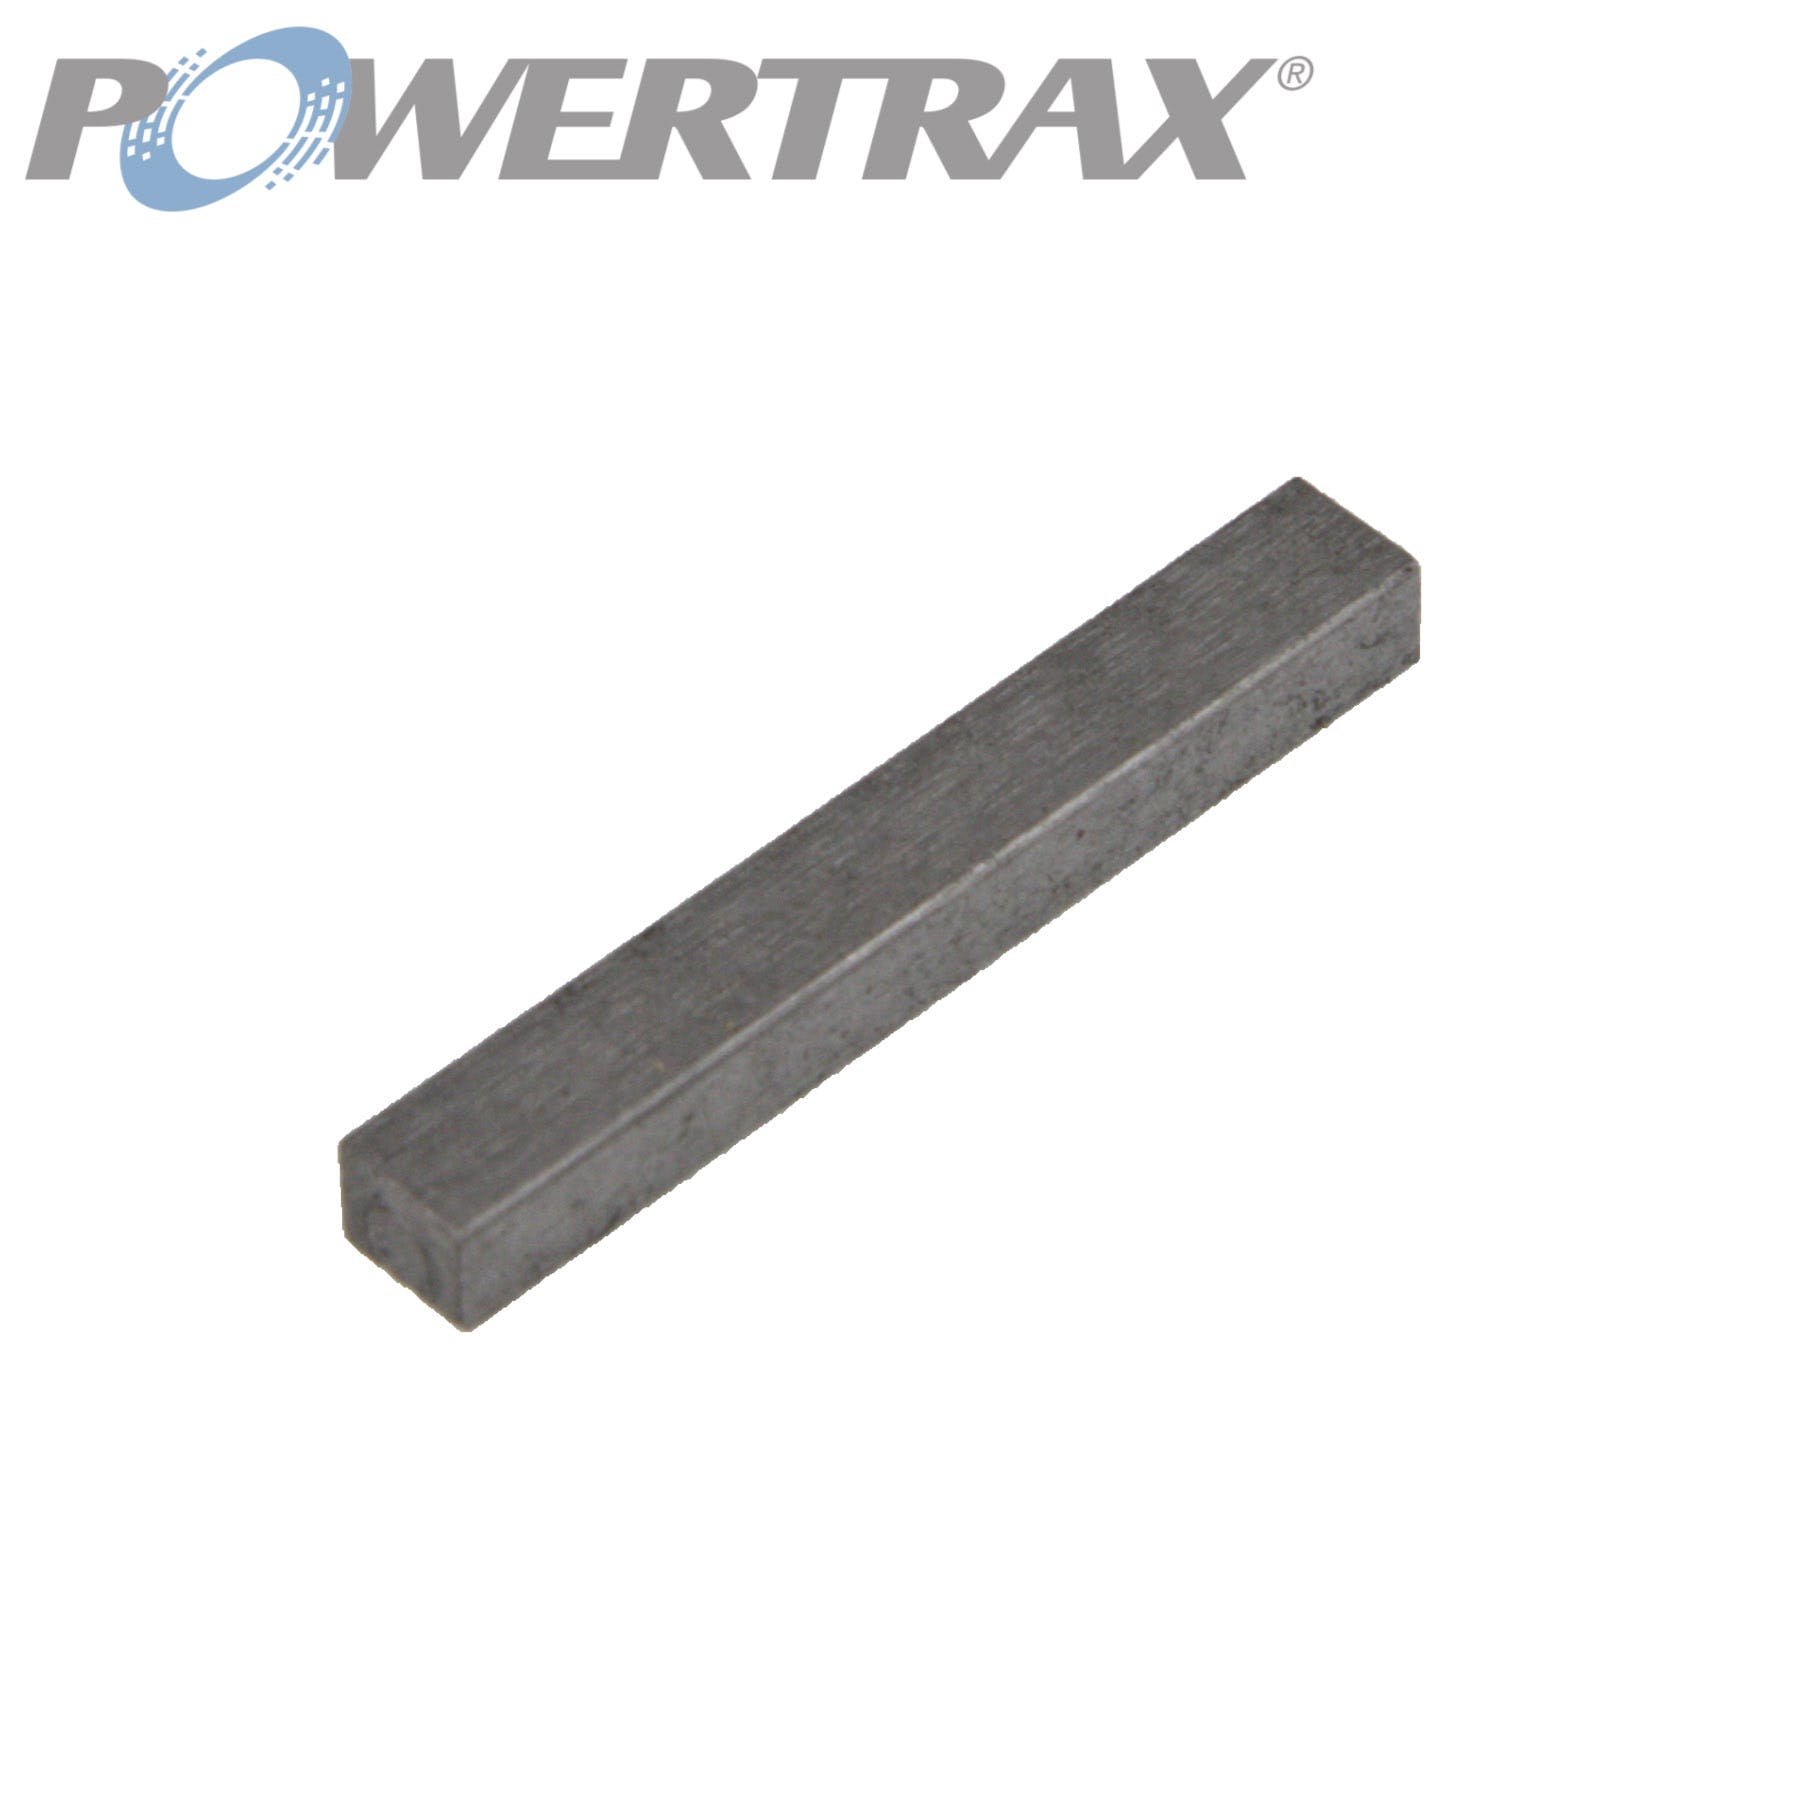 PowerTrax 4211003 Inspection Gap Tool